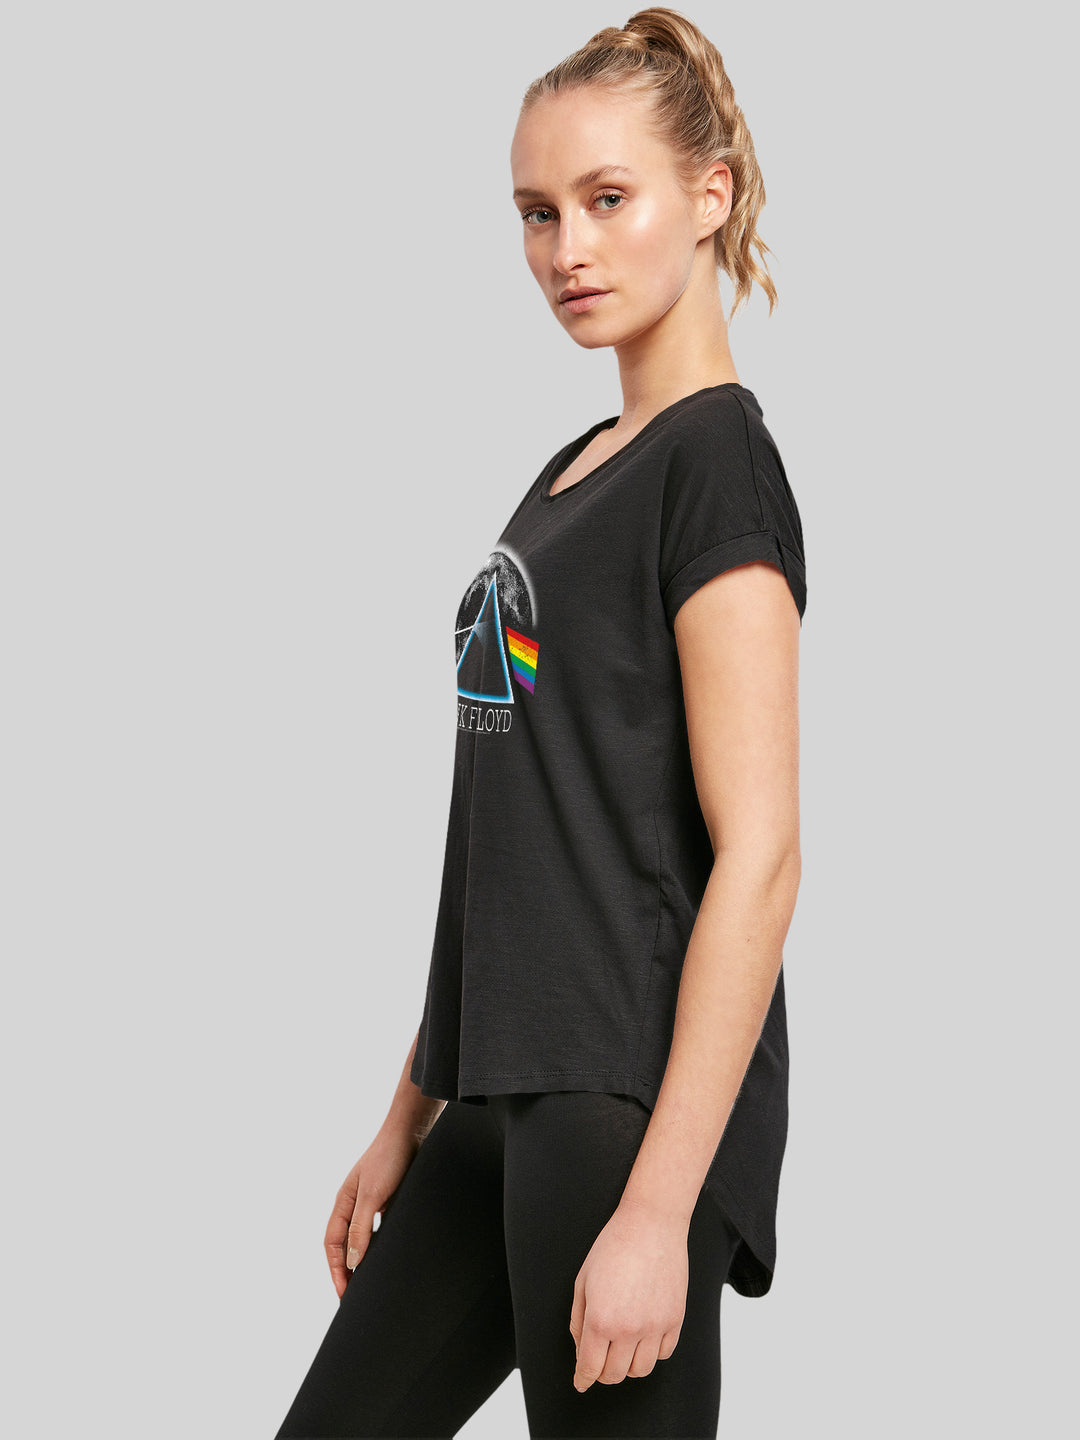 Pink Floyd T-Shirt | Dark Side of The Moon | Premium Long Damen T Shirt